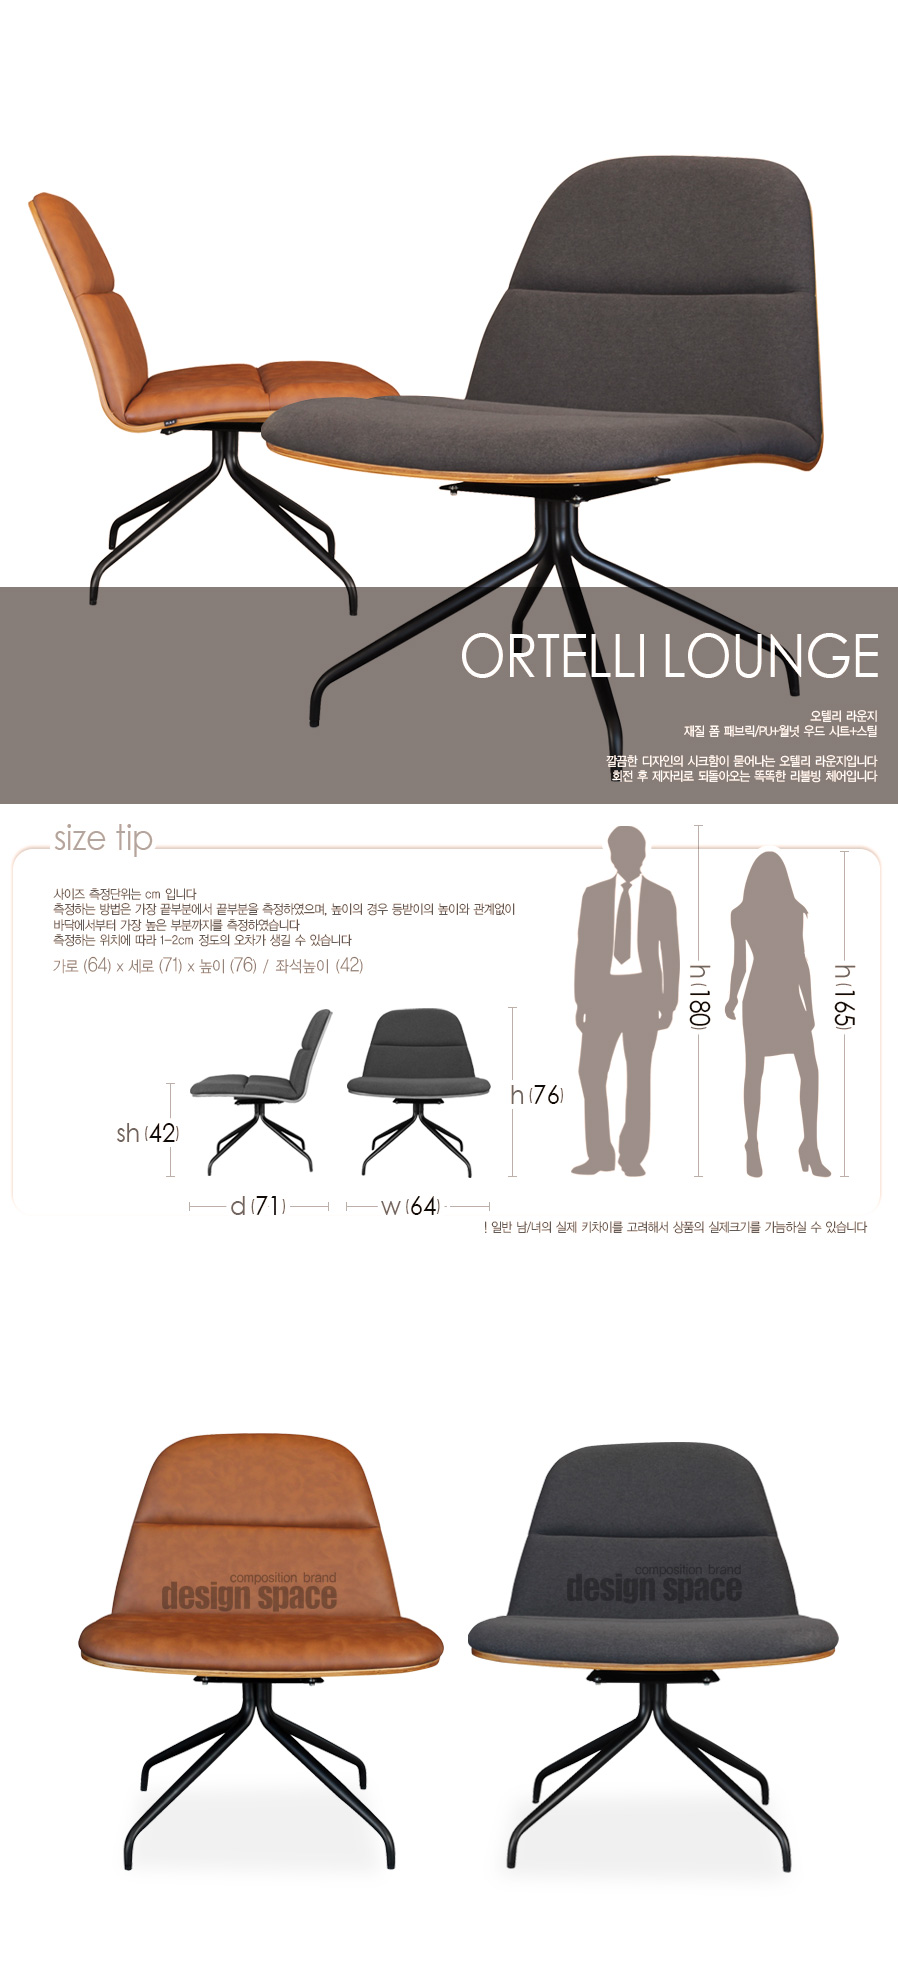 ortelli-lounge_01.jpg